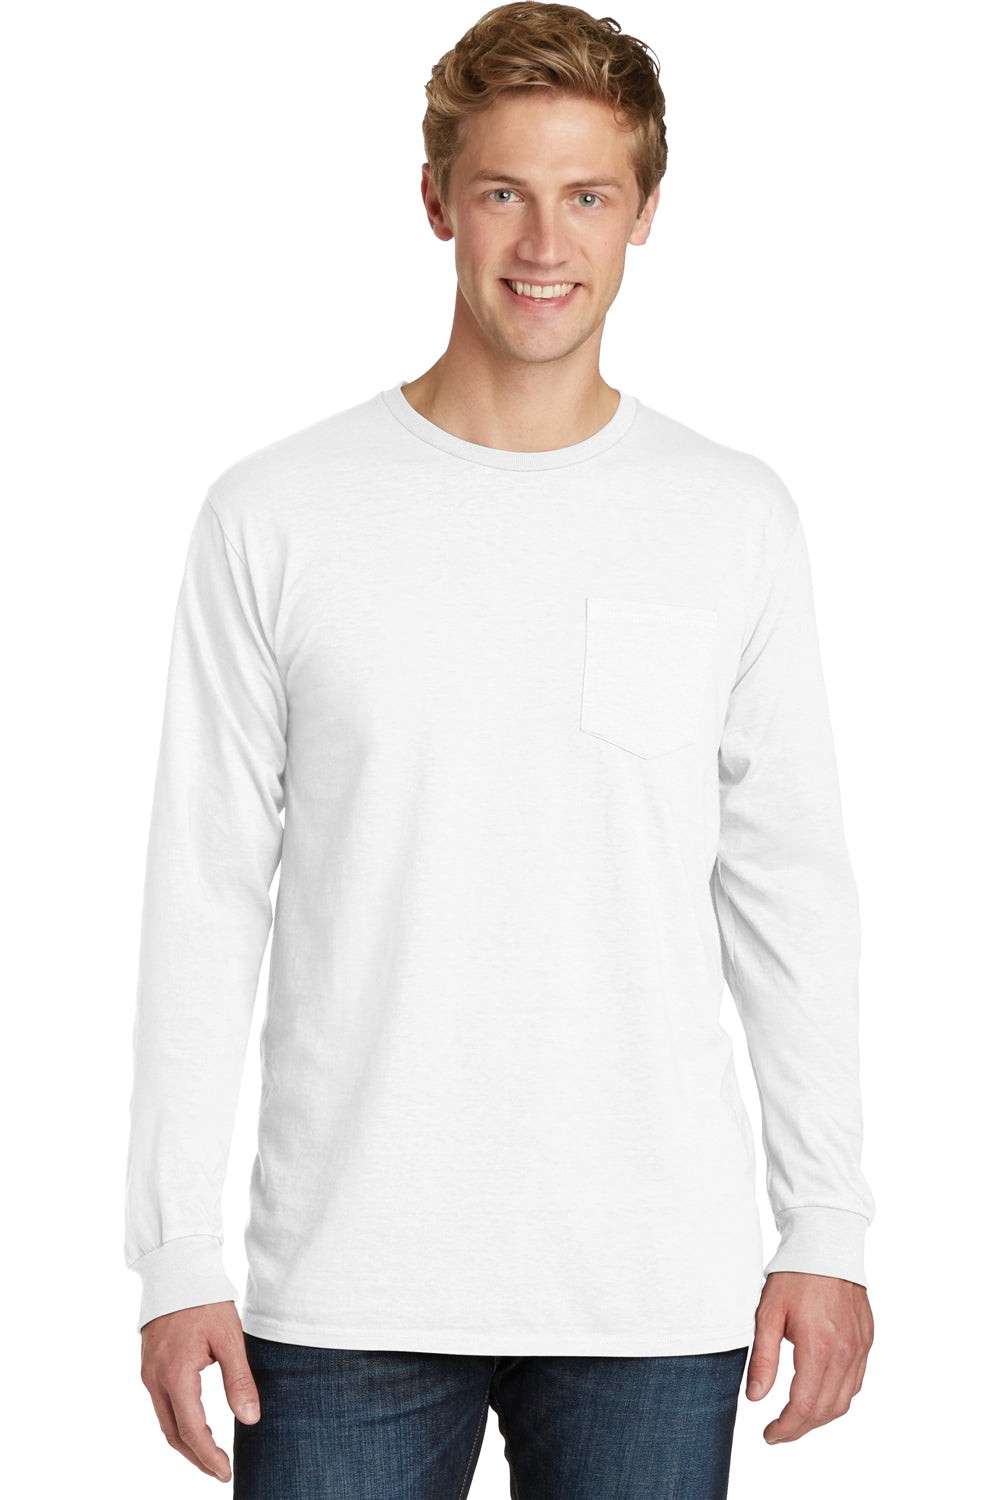 Port & Company PC099LSP Mens Beach Wash Long Sleeve Crewneck T-Shirt w/ Pocket White Front